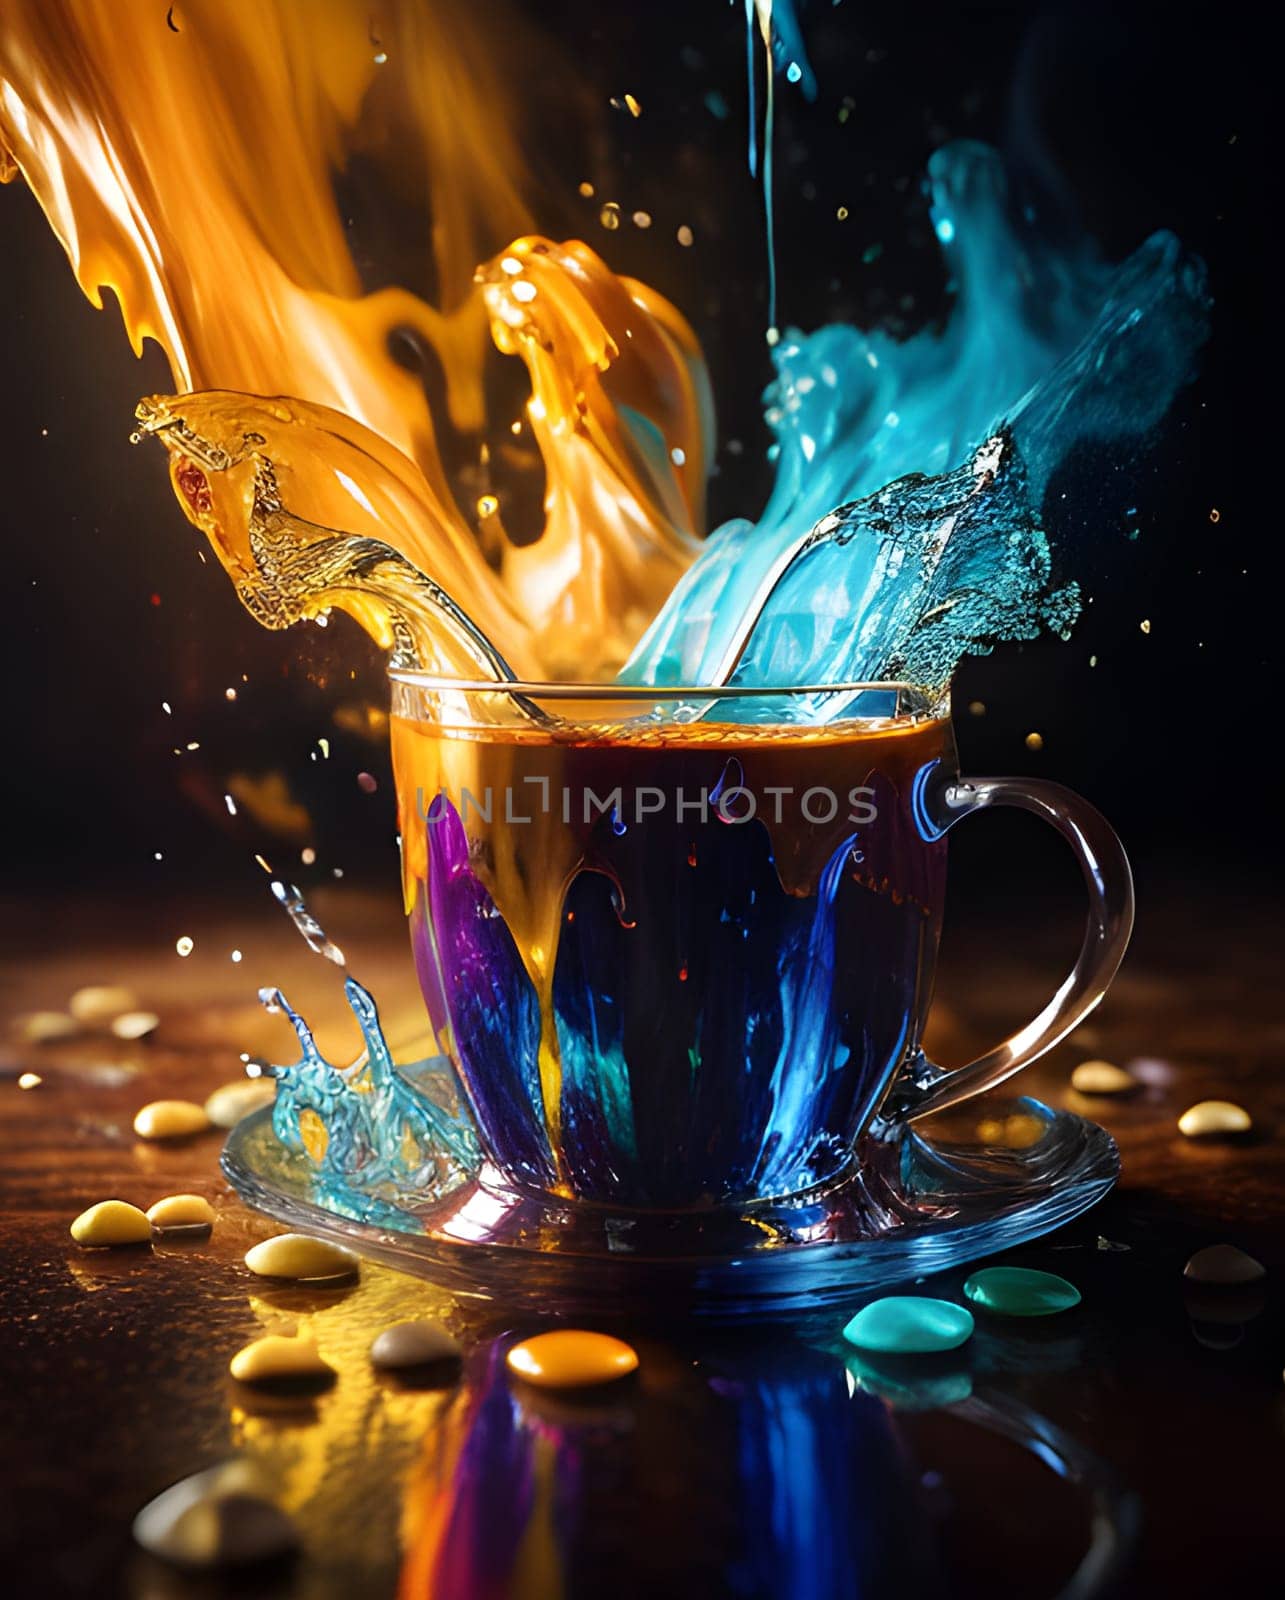 Splashing fluid out of a cup by WielandTeixeira